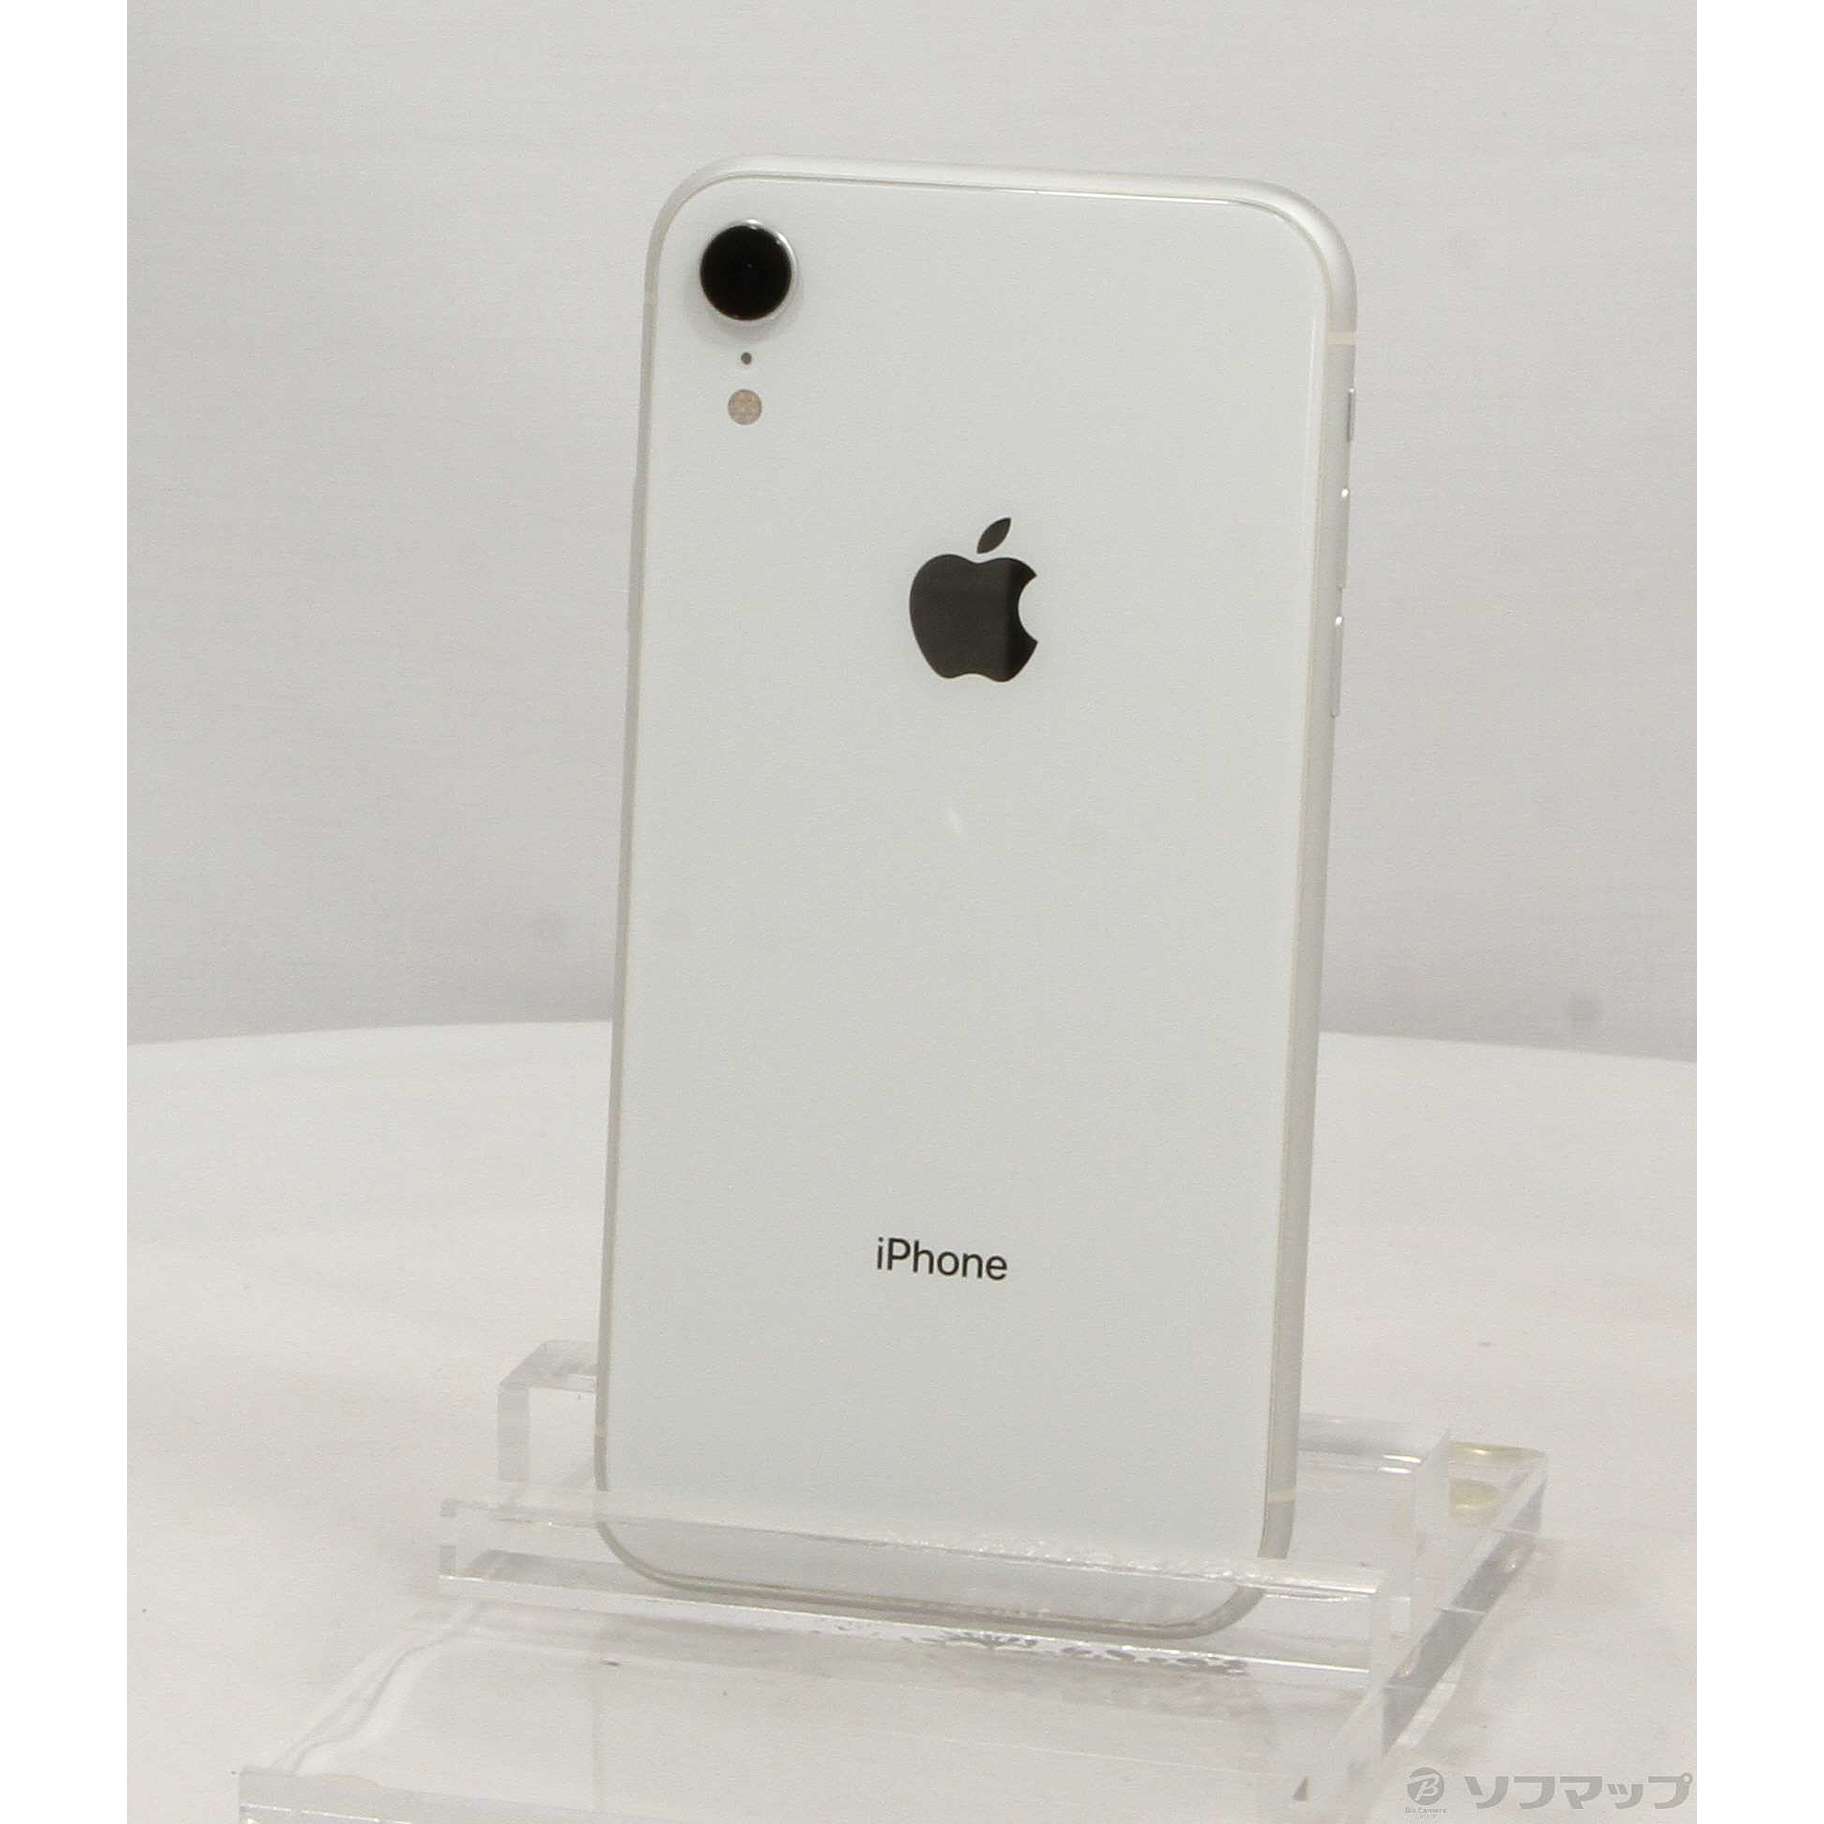 iPhoneiPhoneXR 64GB White